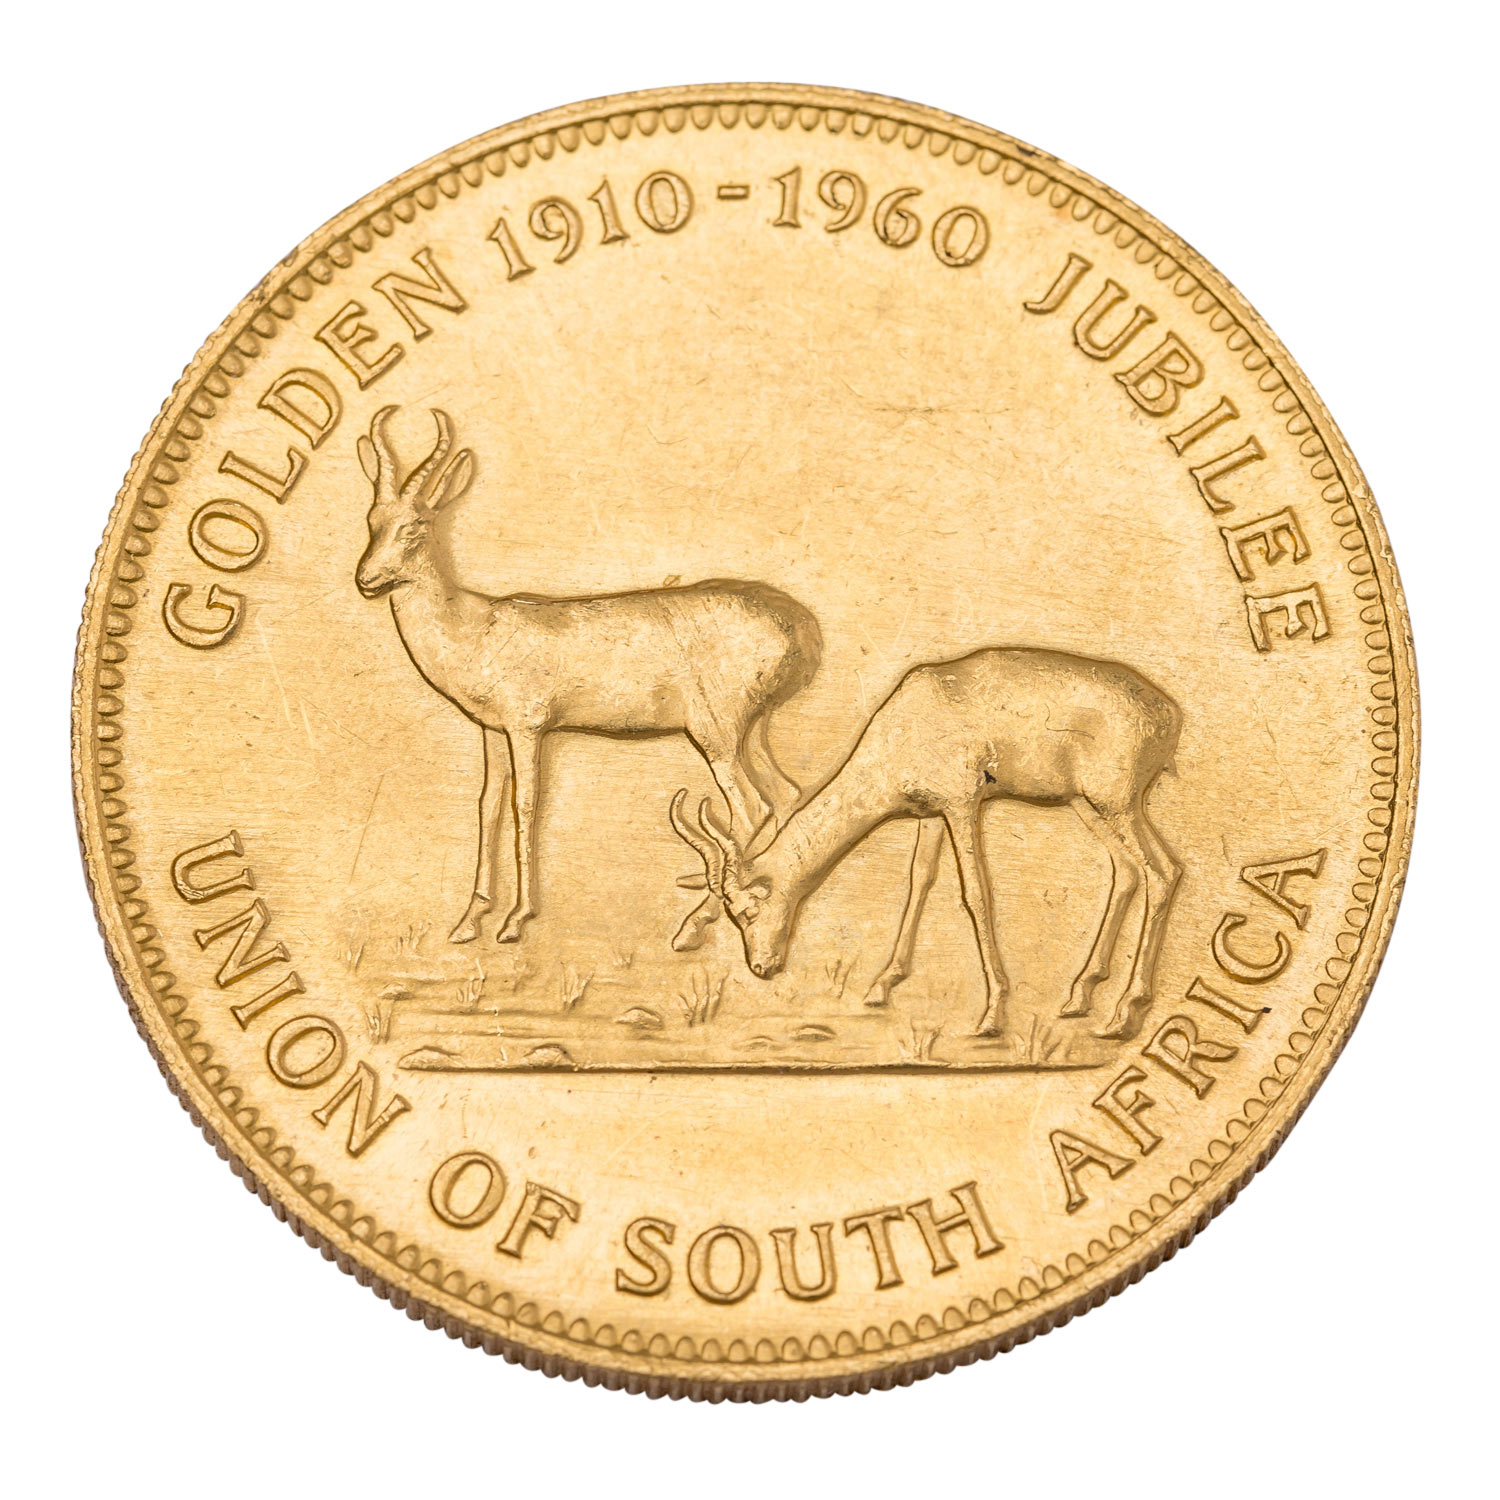 Südafrikanische Union 1910 - 1960, 1 Unze GOLD fein (996/1.000 legiert), - Image 2 of 2